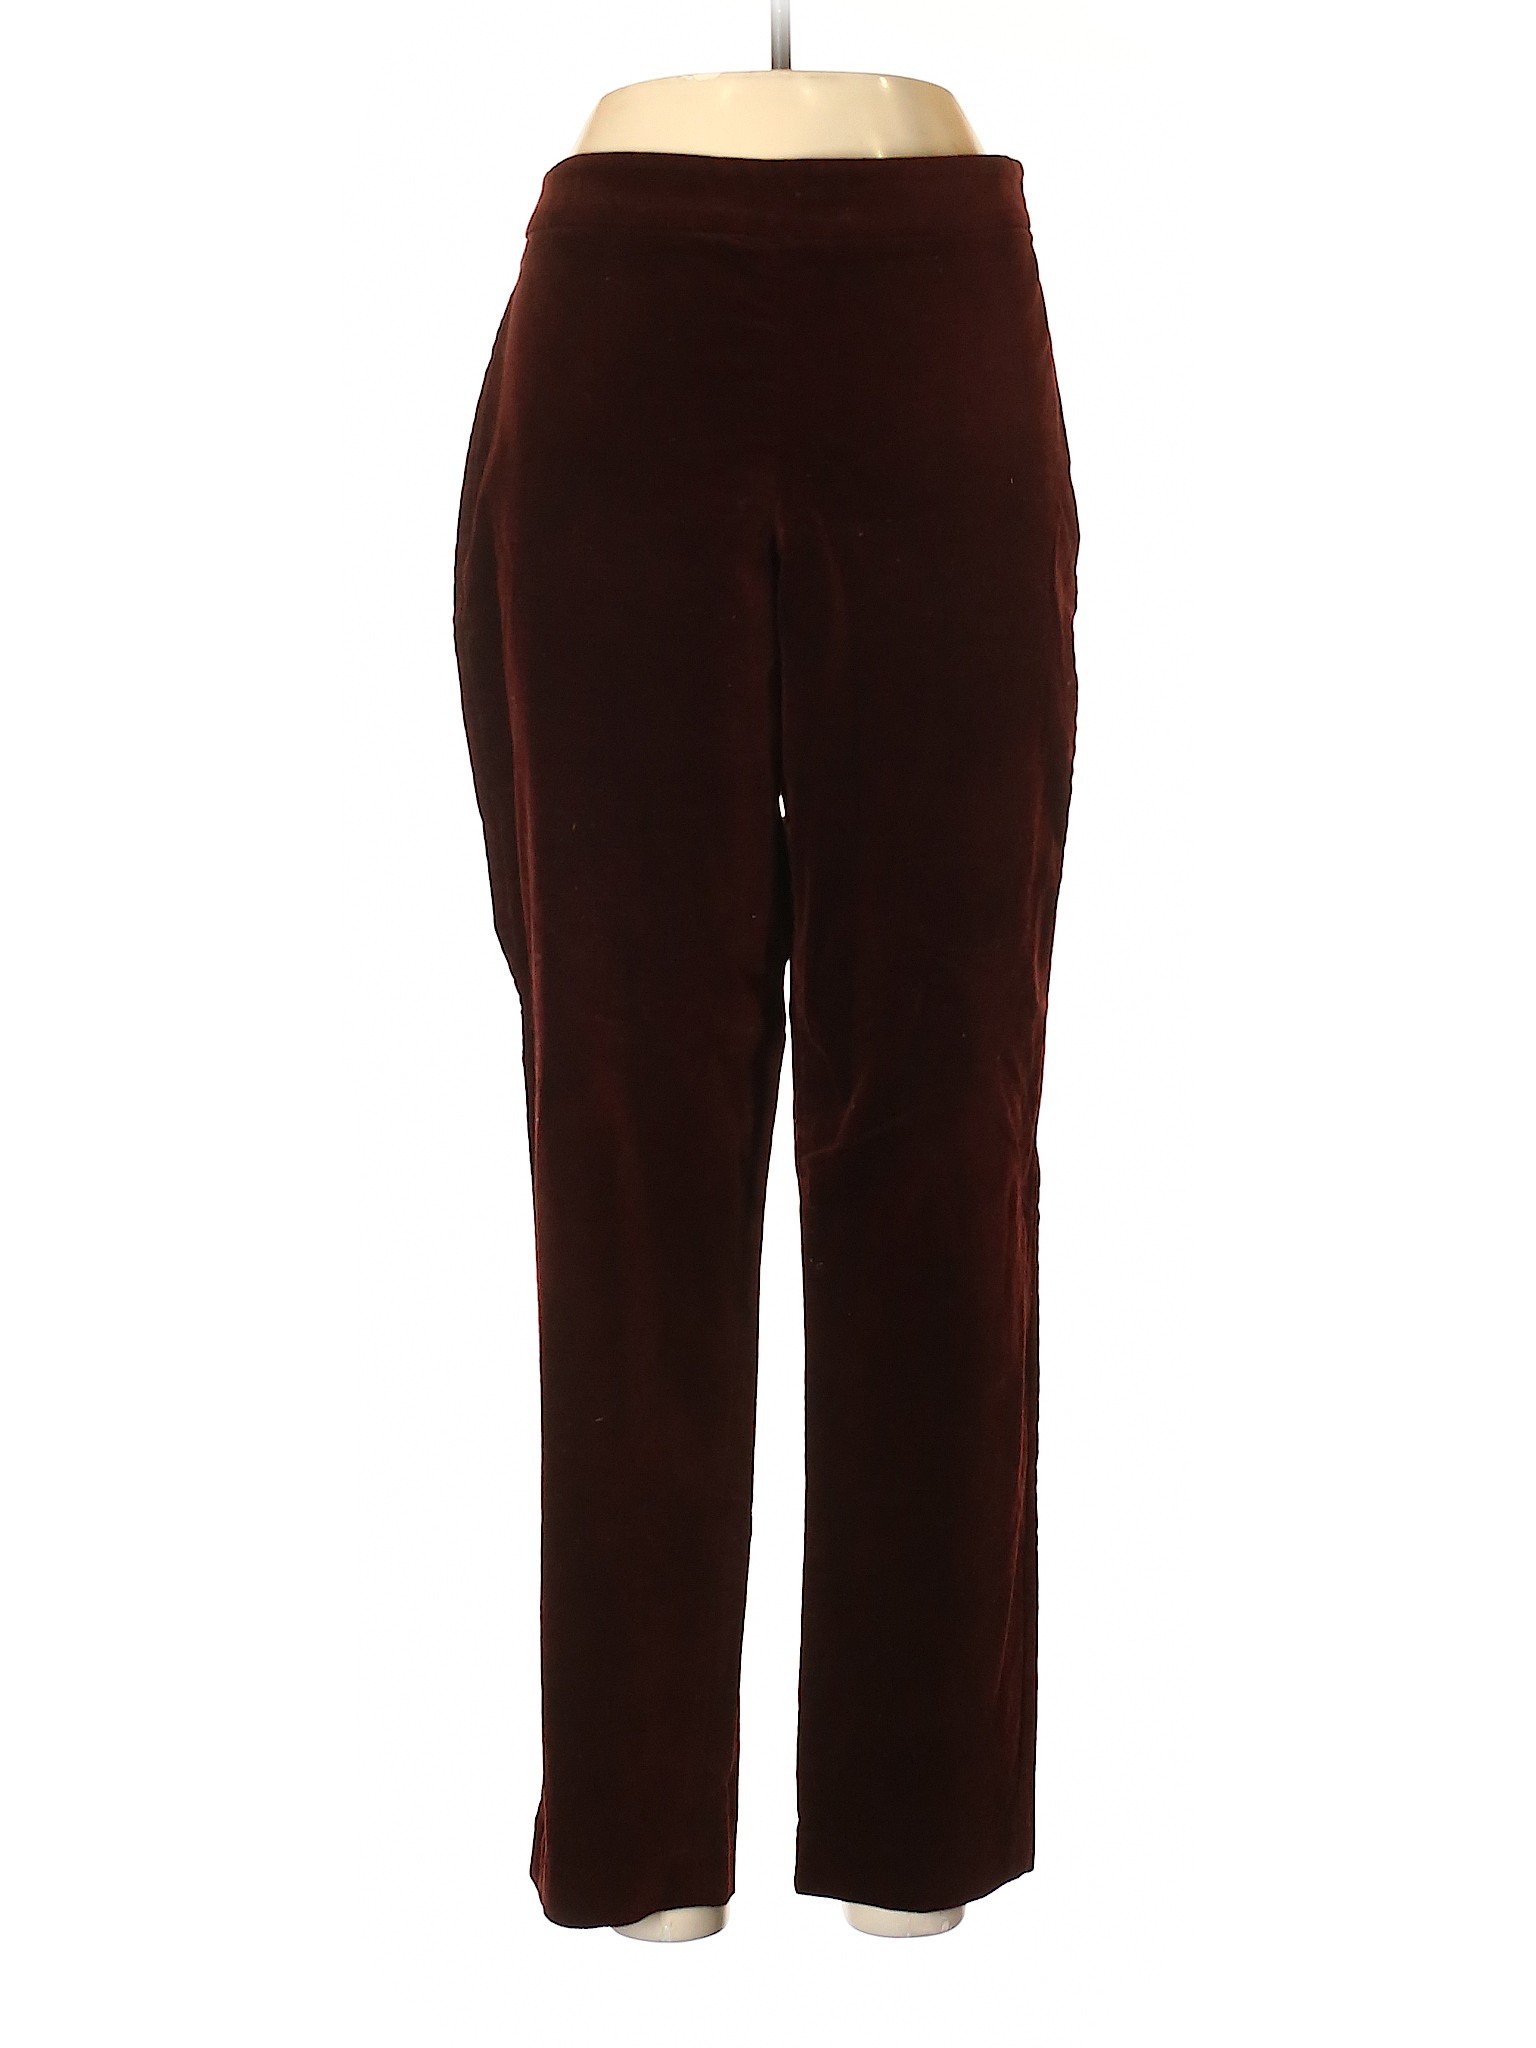 Talbots Women Brown Velour Pants 10 | eBay